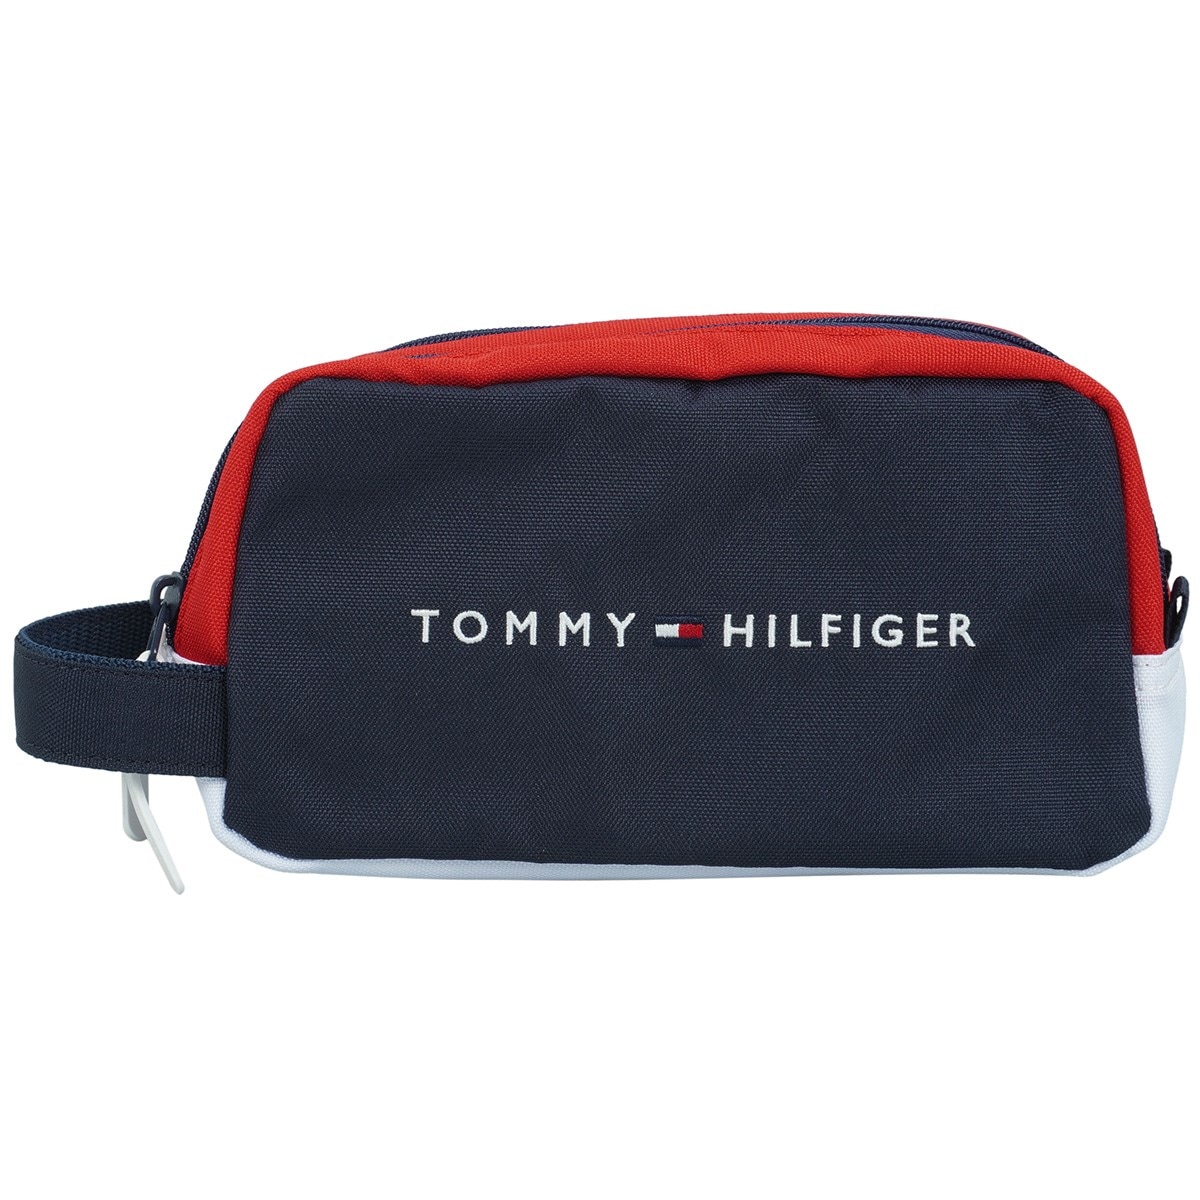 SIGNATURE ラウンドポーチ(ポーチ・小物入れ)|TOMMY HILFIGER GOLF(トミー ヒルフィガー ゴルフ) THMG9FBBの通販  GDOゴルフショップ(0000590988)